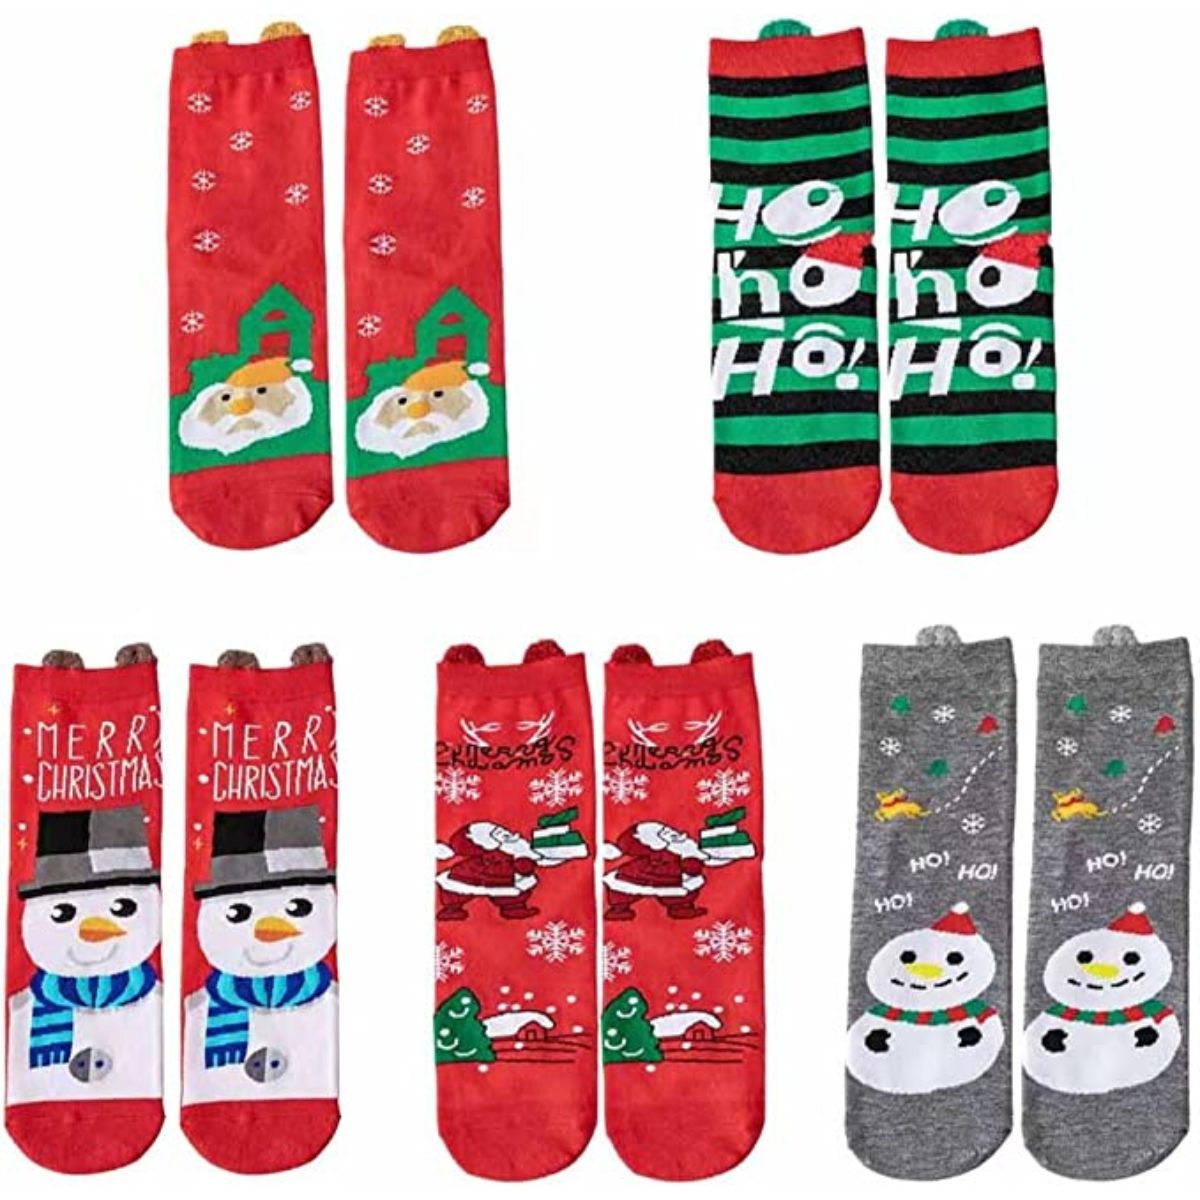 calcetines navideños con orejitas largas (12 pares)